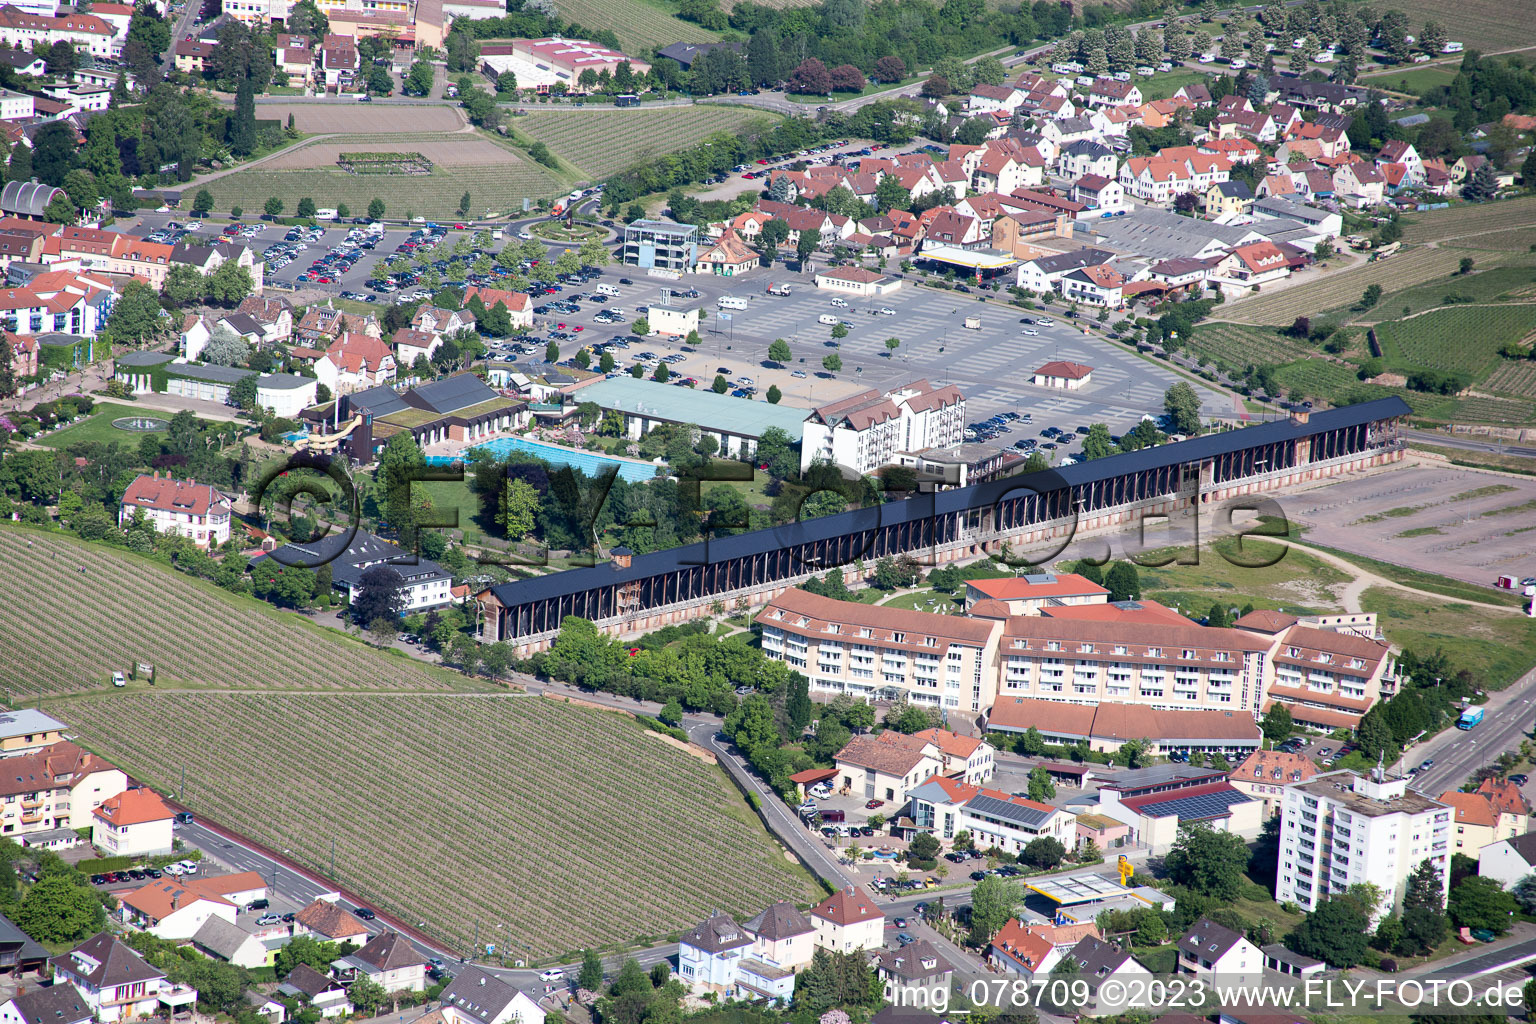 Graduation building Saline in Bad Dürkheim in the state Rhineland-Palatinate, Germany